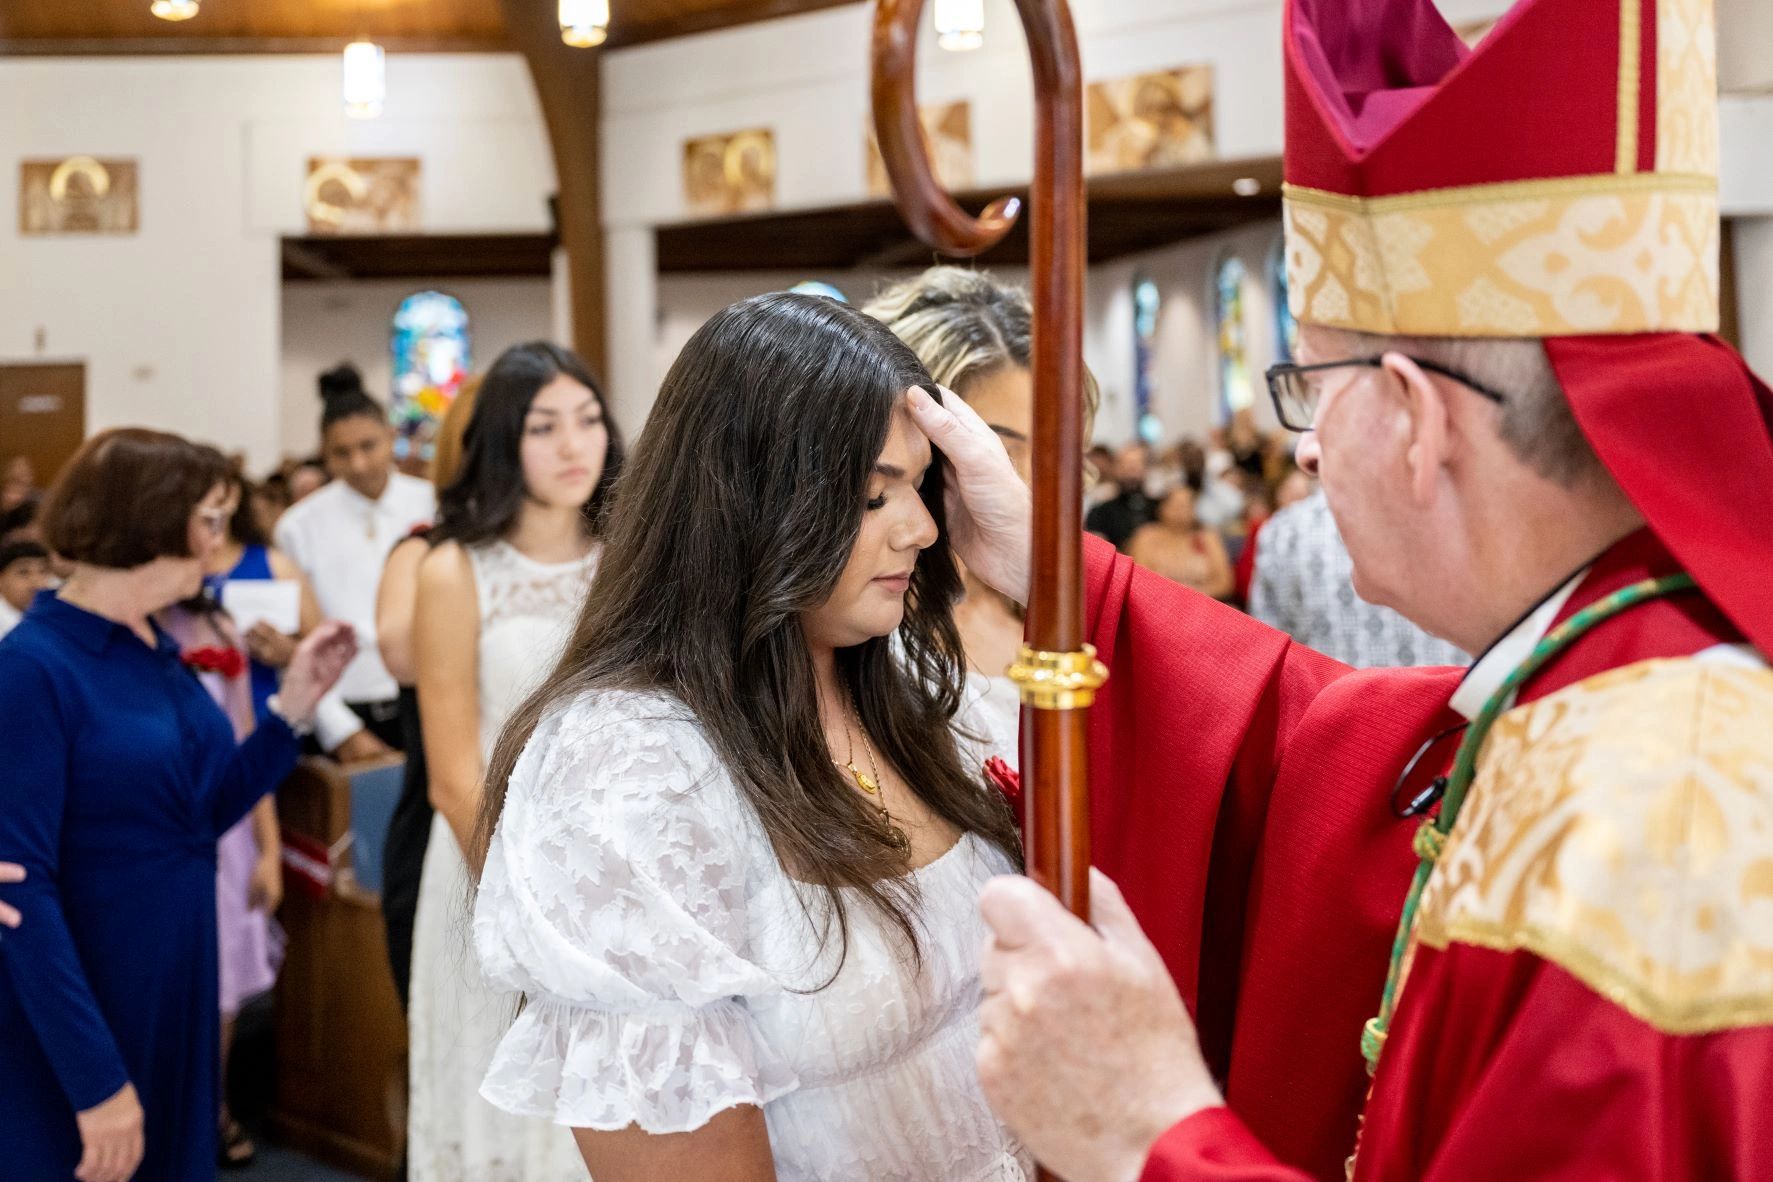 sacrament of confirmation